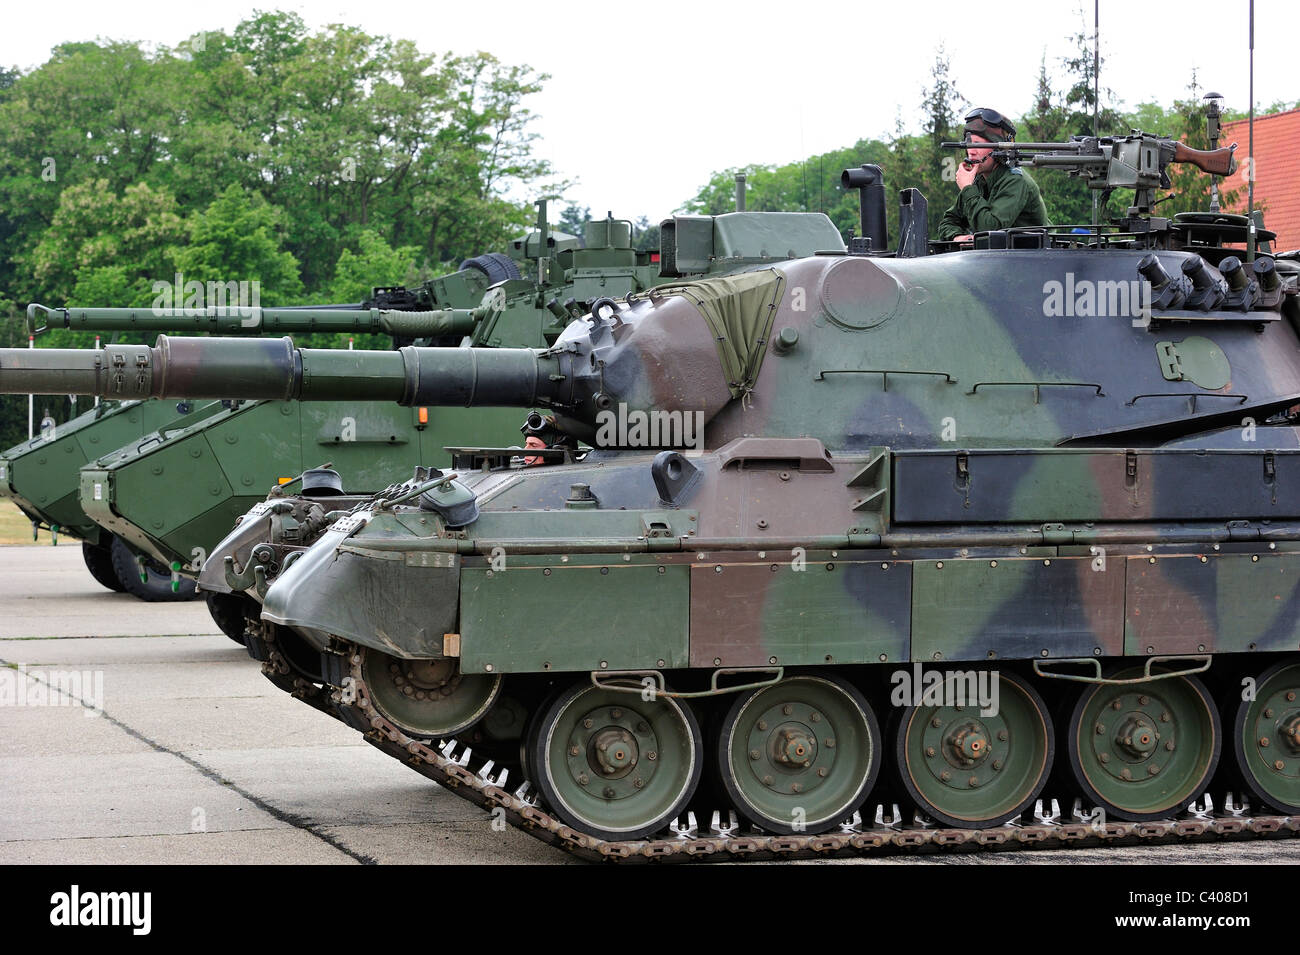 Fahrer und Kommandant im Turm des Kampfpanzers Leopard 1 der belgischen Armee, Belgien Stockfoto